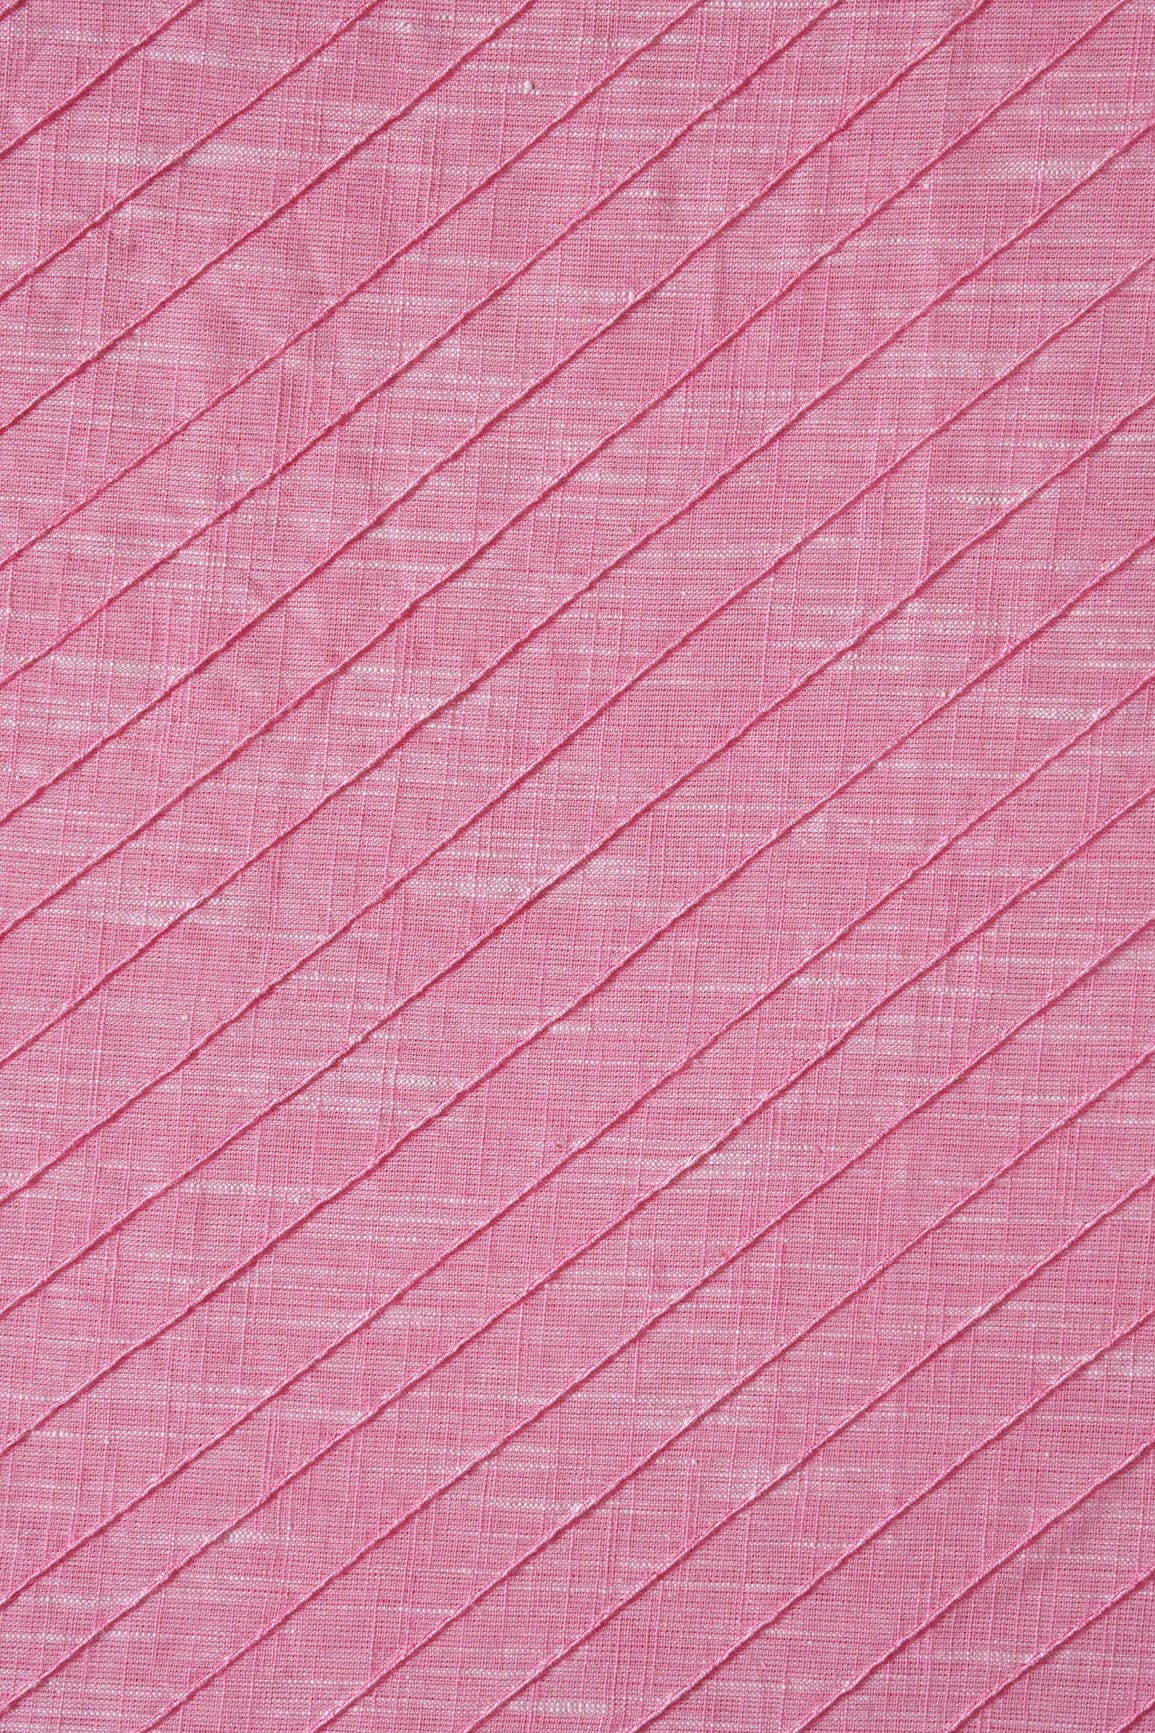 doeraa Plain Dyed Fabrics Pink Stripes Pin-Tucks Plain Cotton Fabric